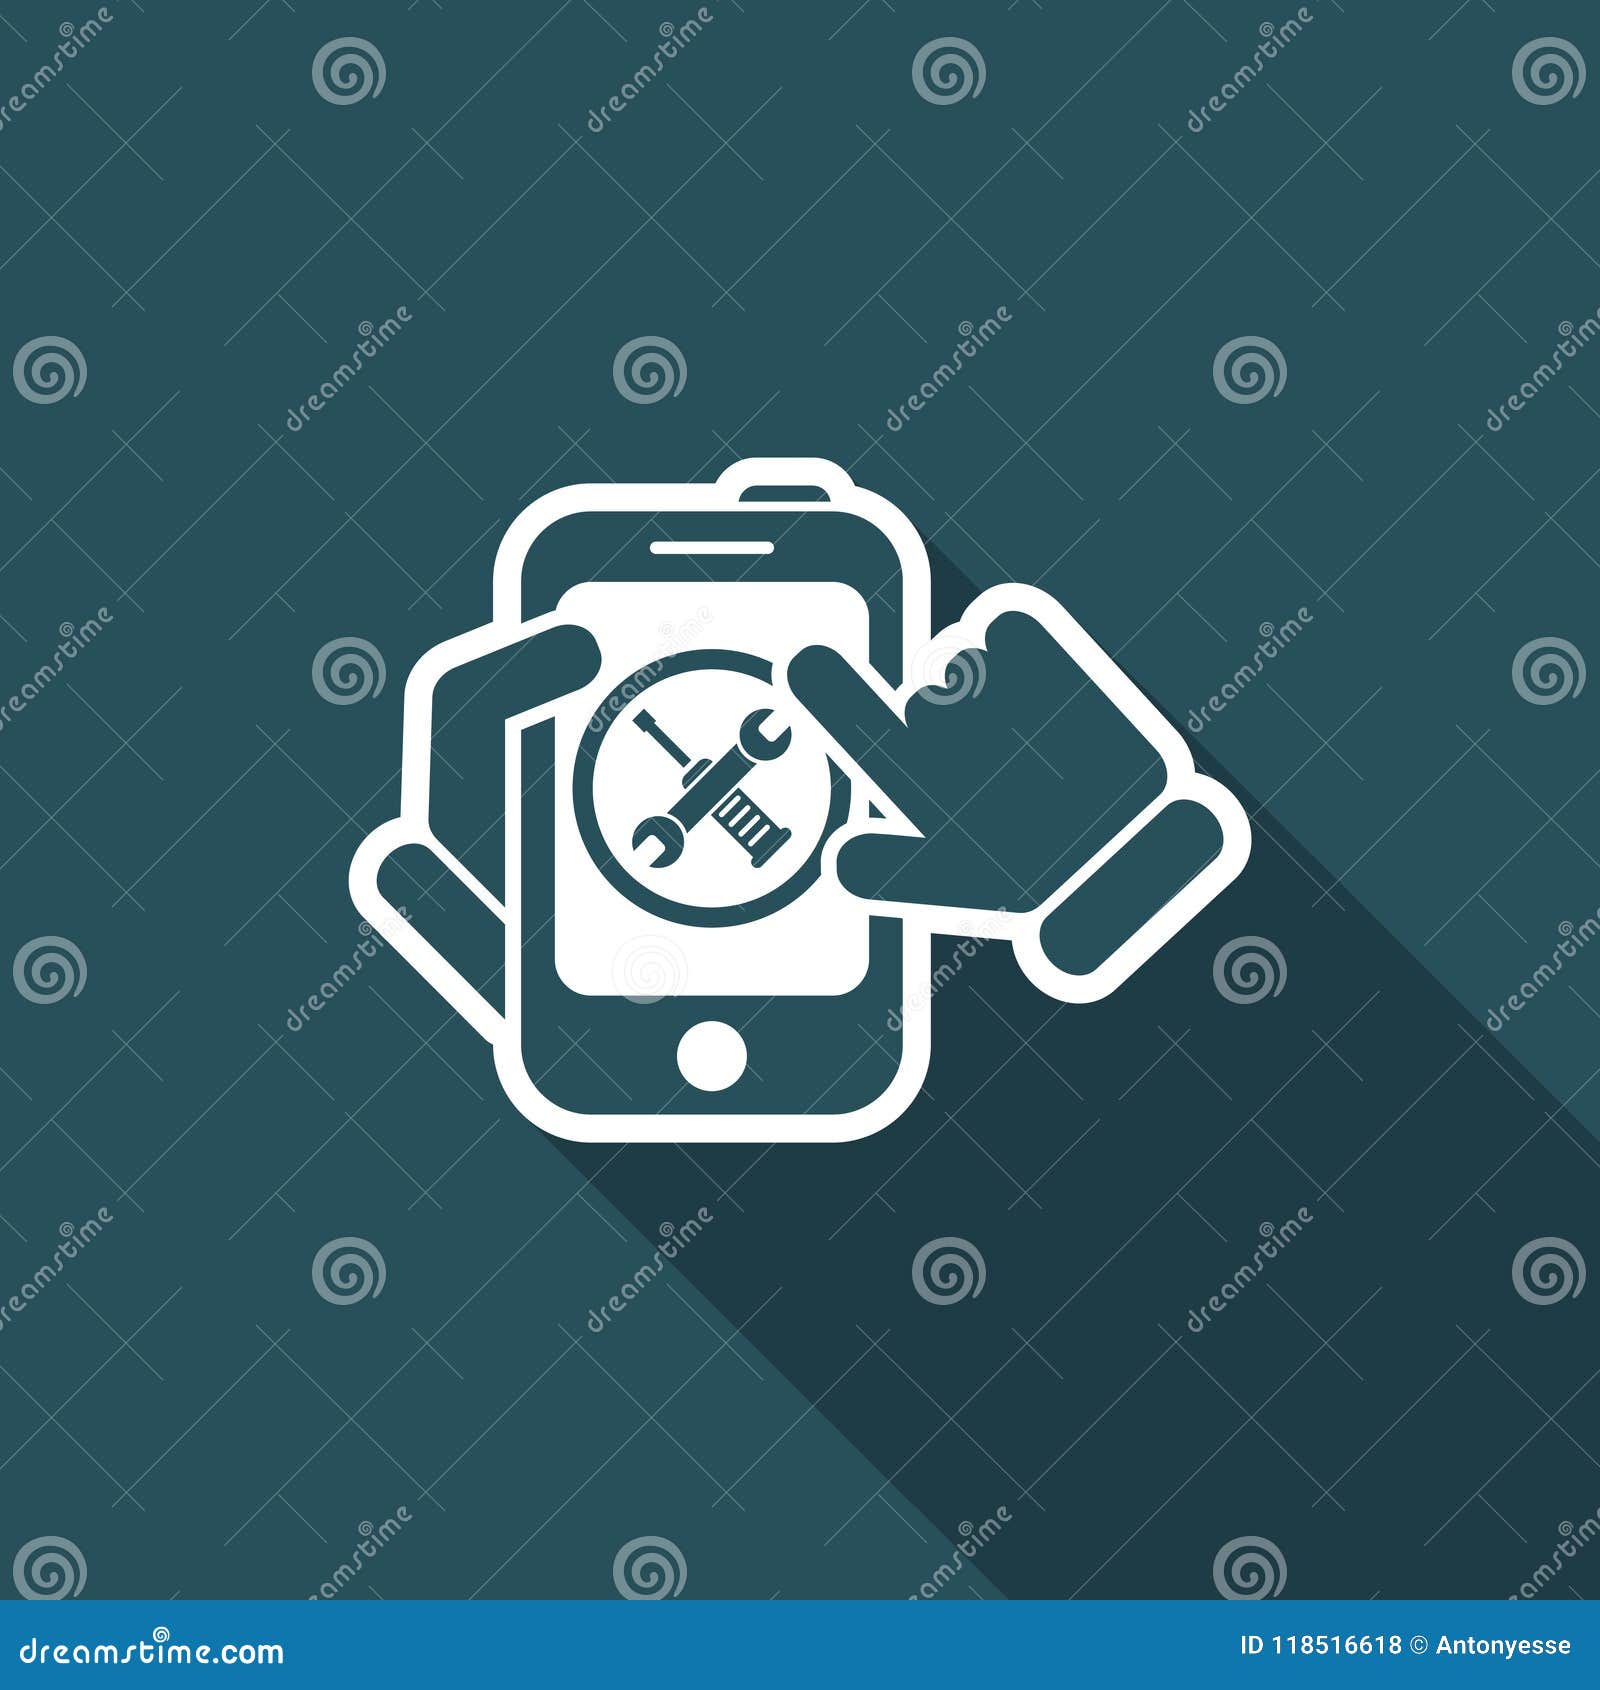 smartphone setting icon